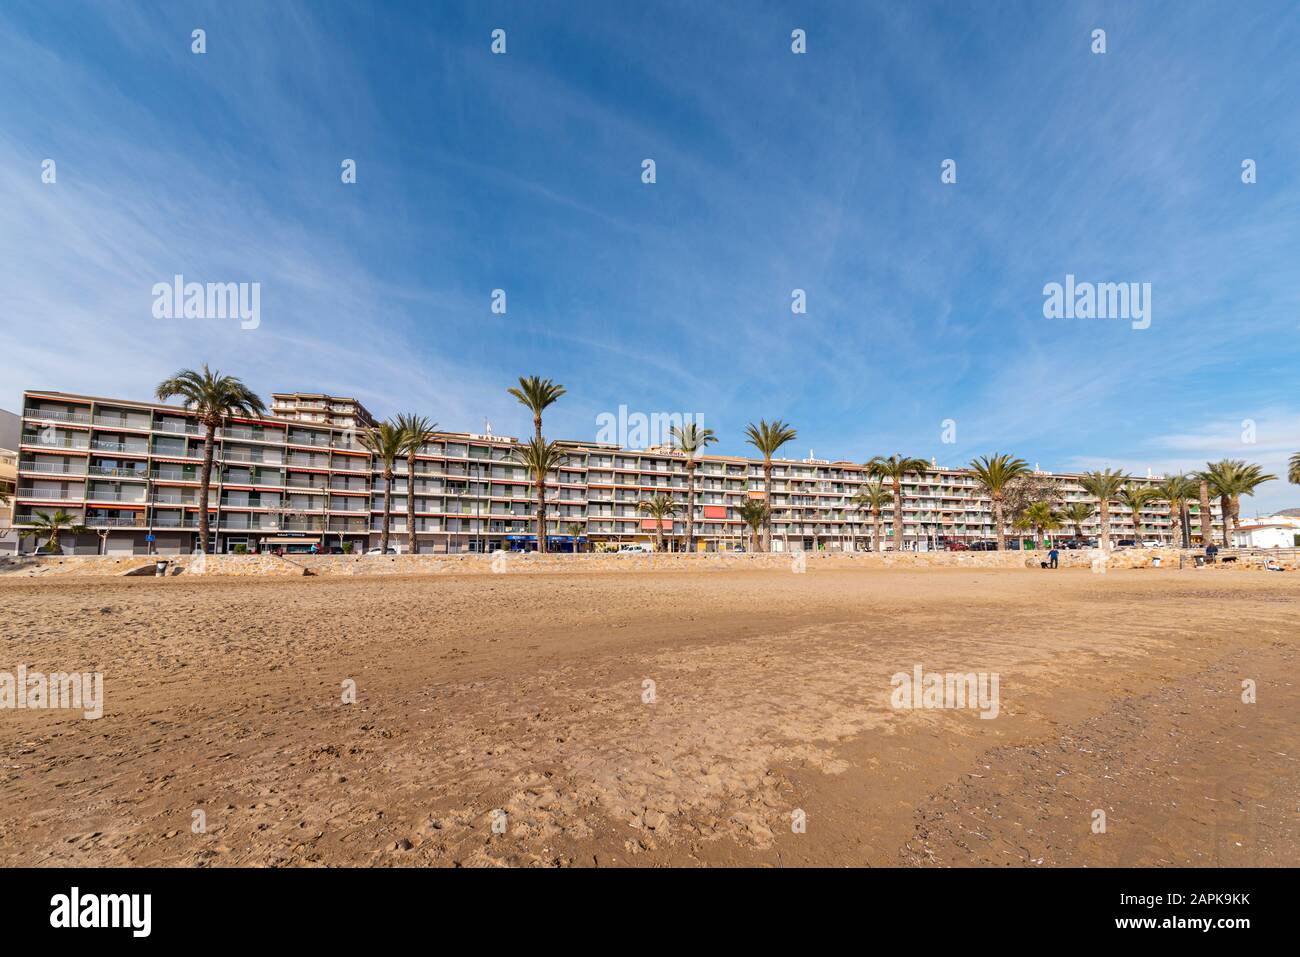 Hotels on the beach front at Puerto de Mazarron, Region de Murcia, Costa Calida, Spain. Named statues on roofs. Mediterranean sea apartments Stock Photo